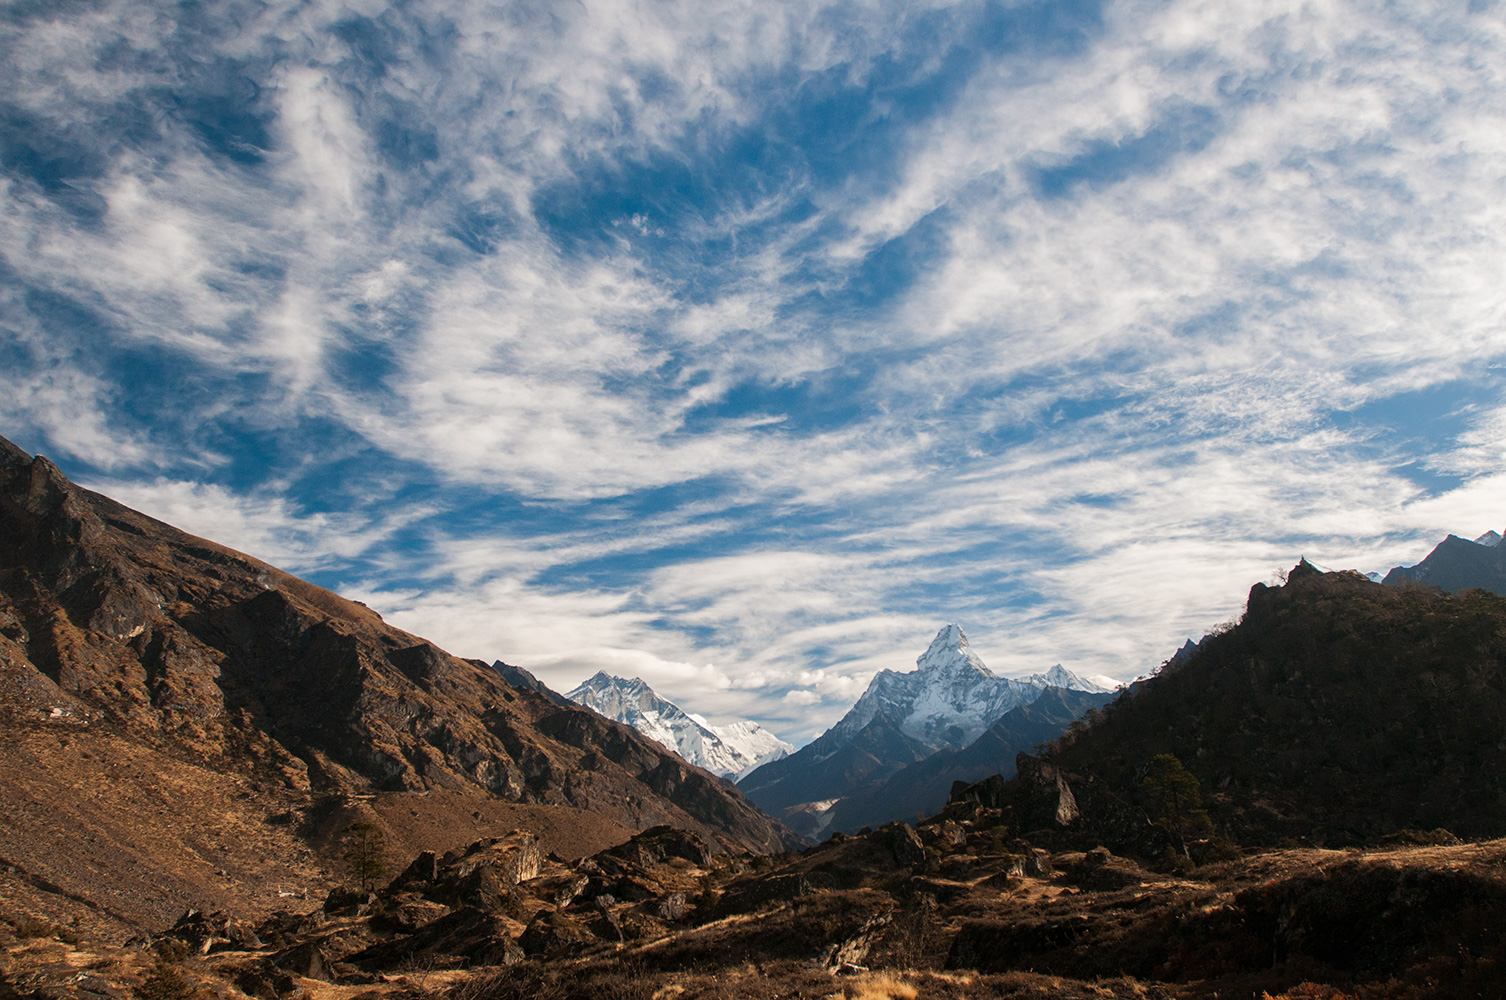 A view up valley from near Khumjung, under a winter sky.Nikon D300, 17-35mm. December 2008